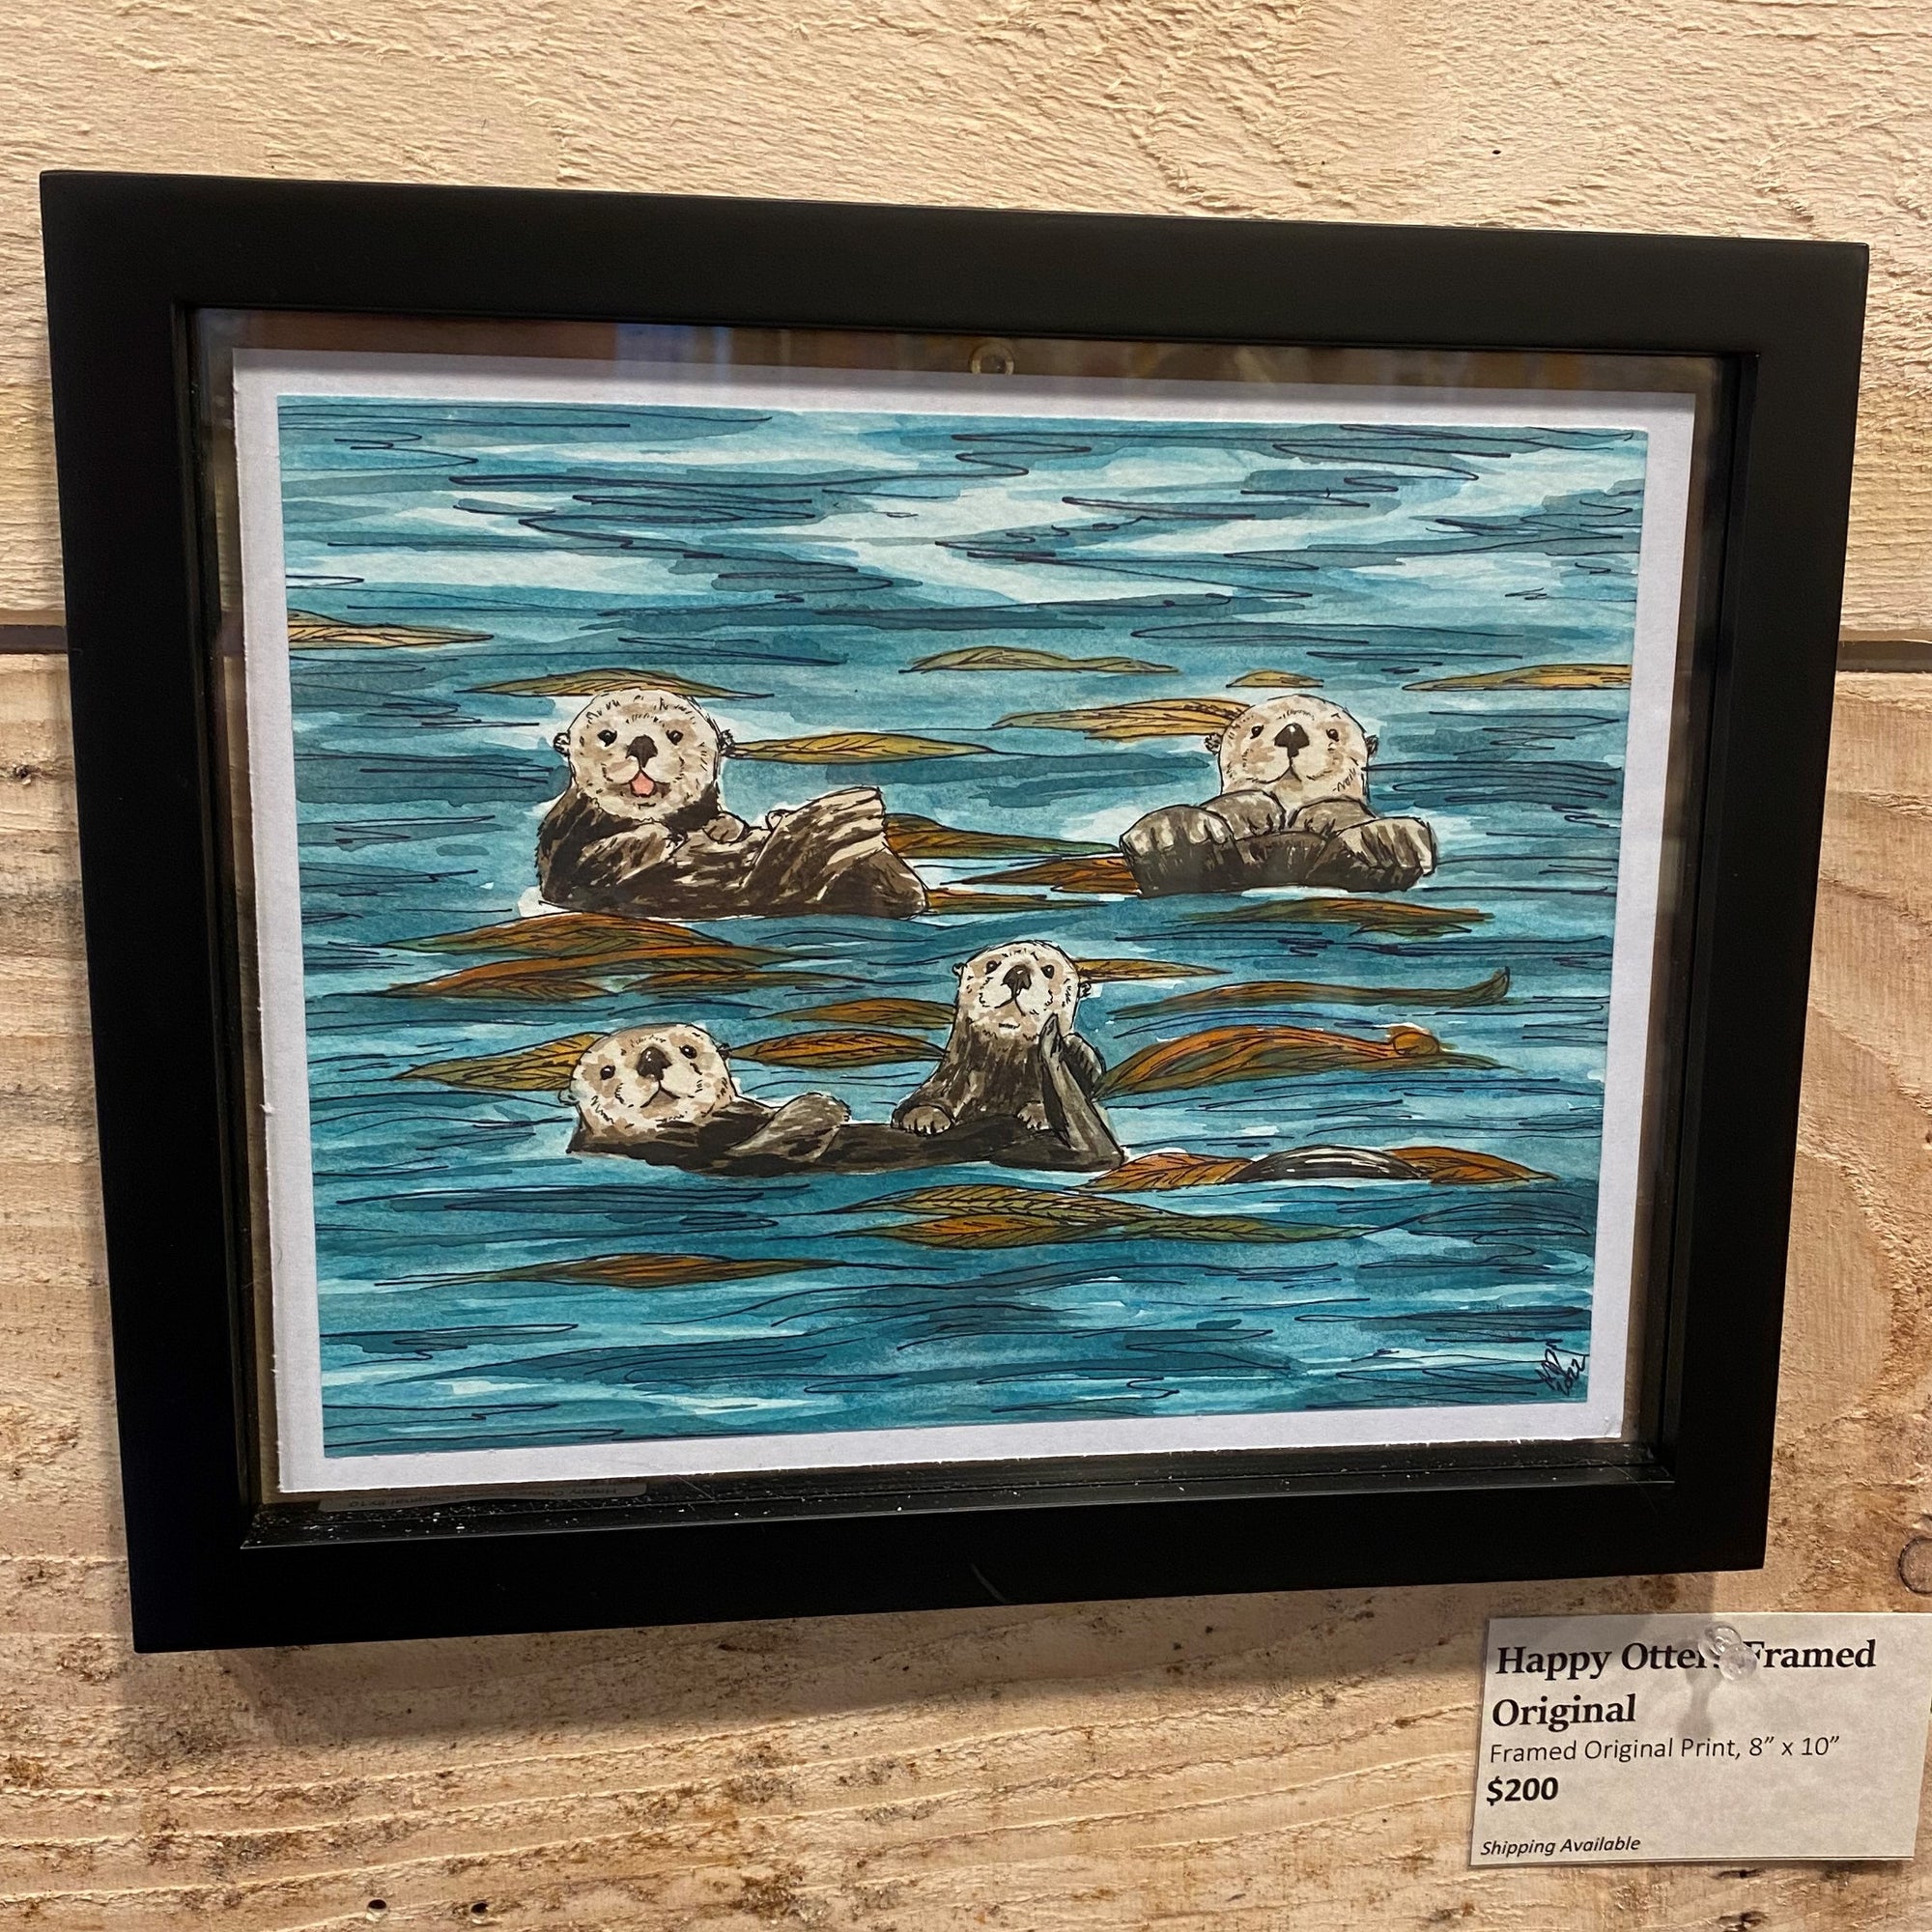 Happy Otters Framed Original 8x10